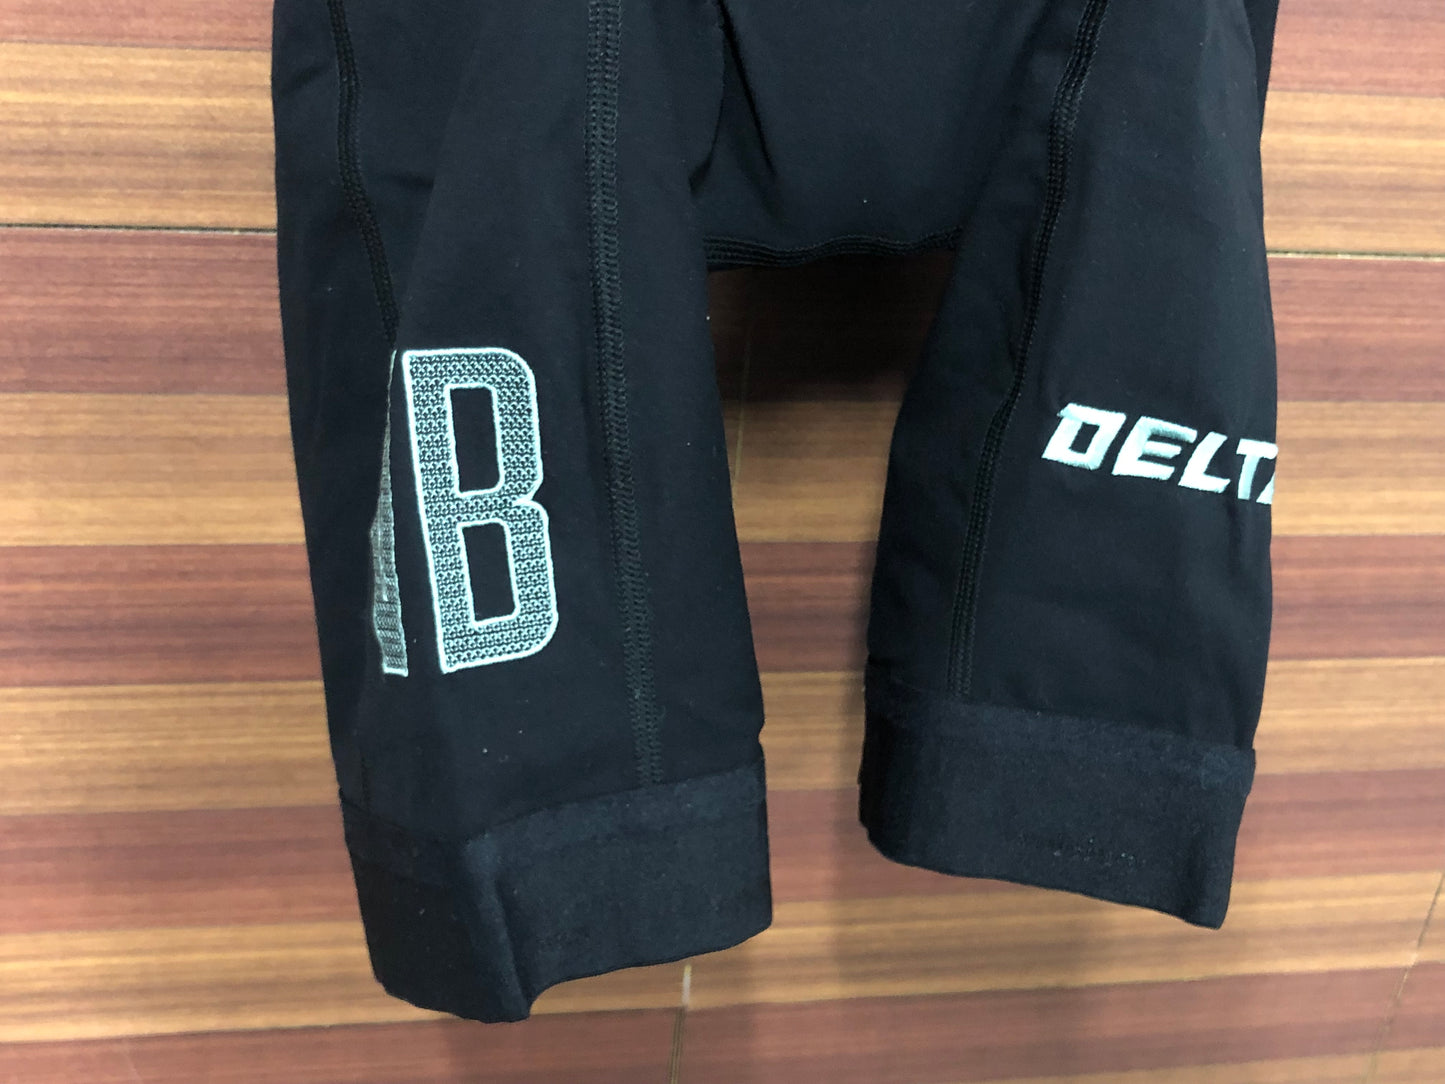 HM248 VELOBICI ヴェロビチ Delta Bib Shorts ビブショーツ Women Black/Seaform WXS